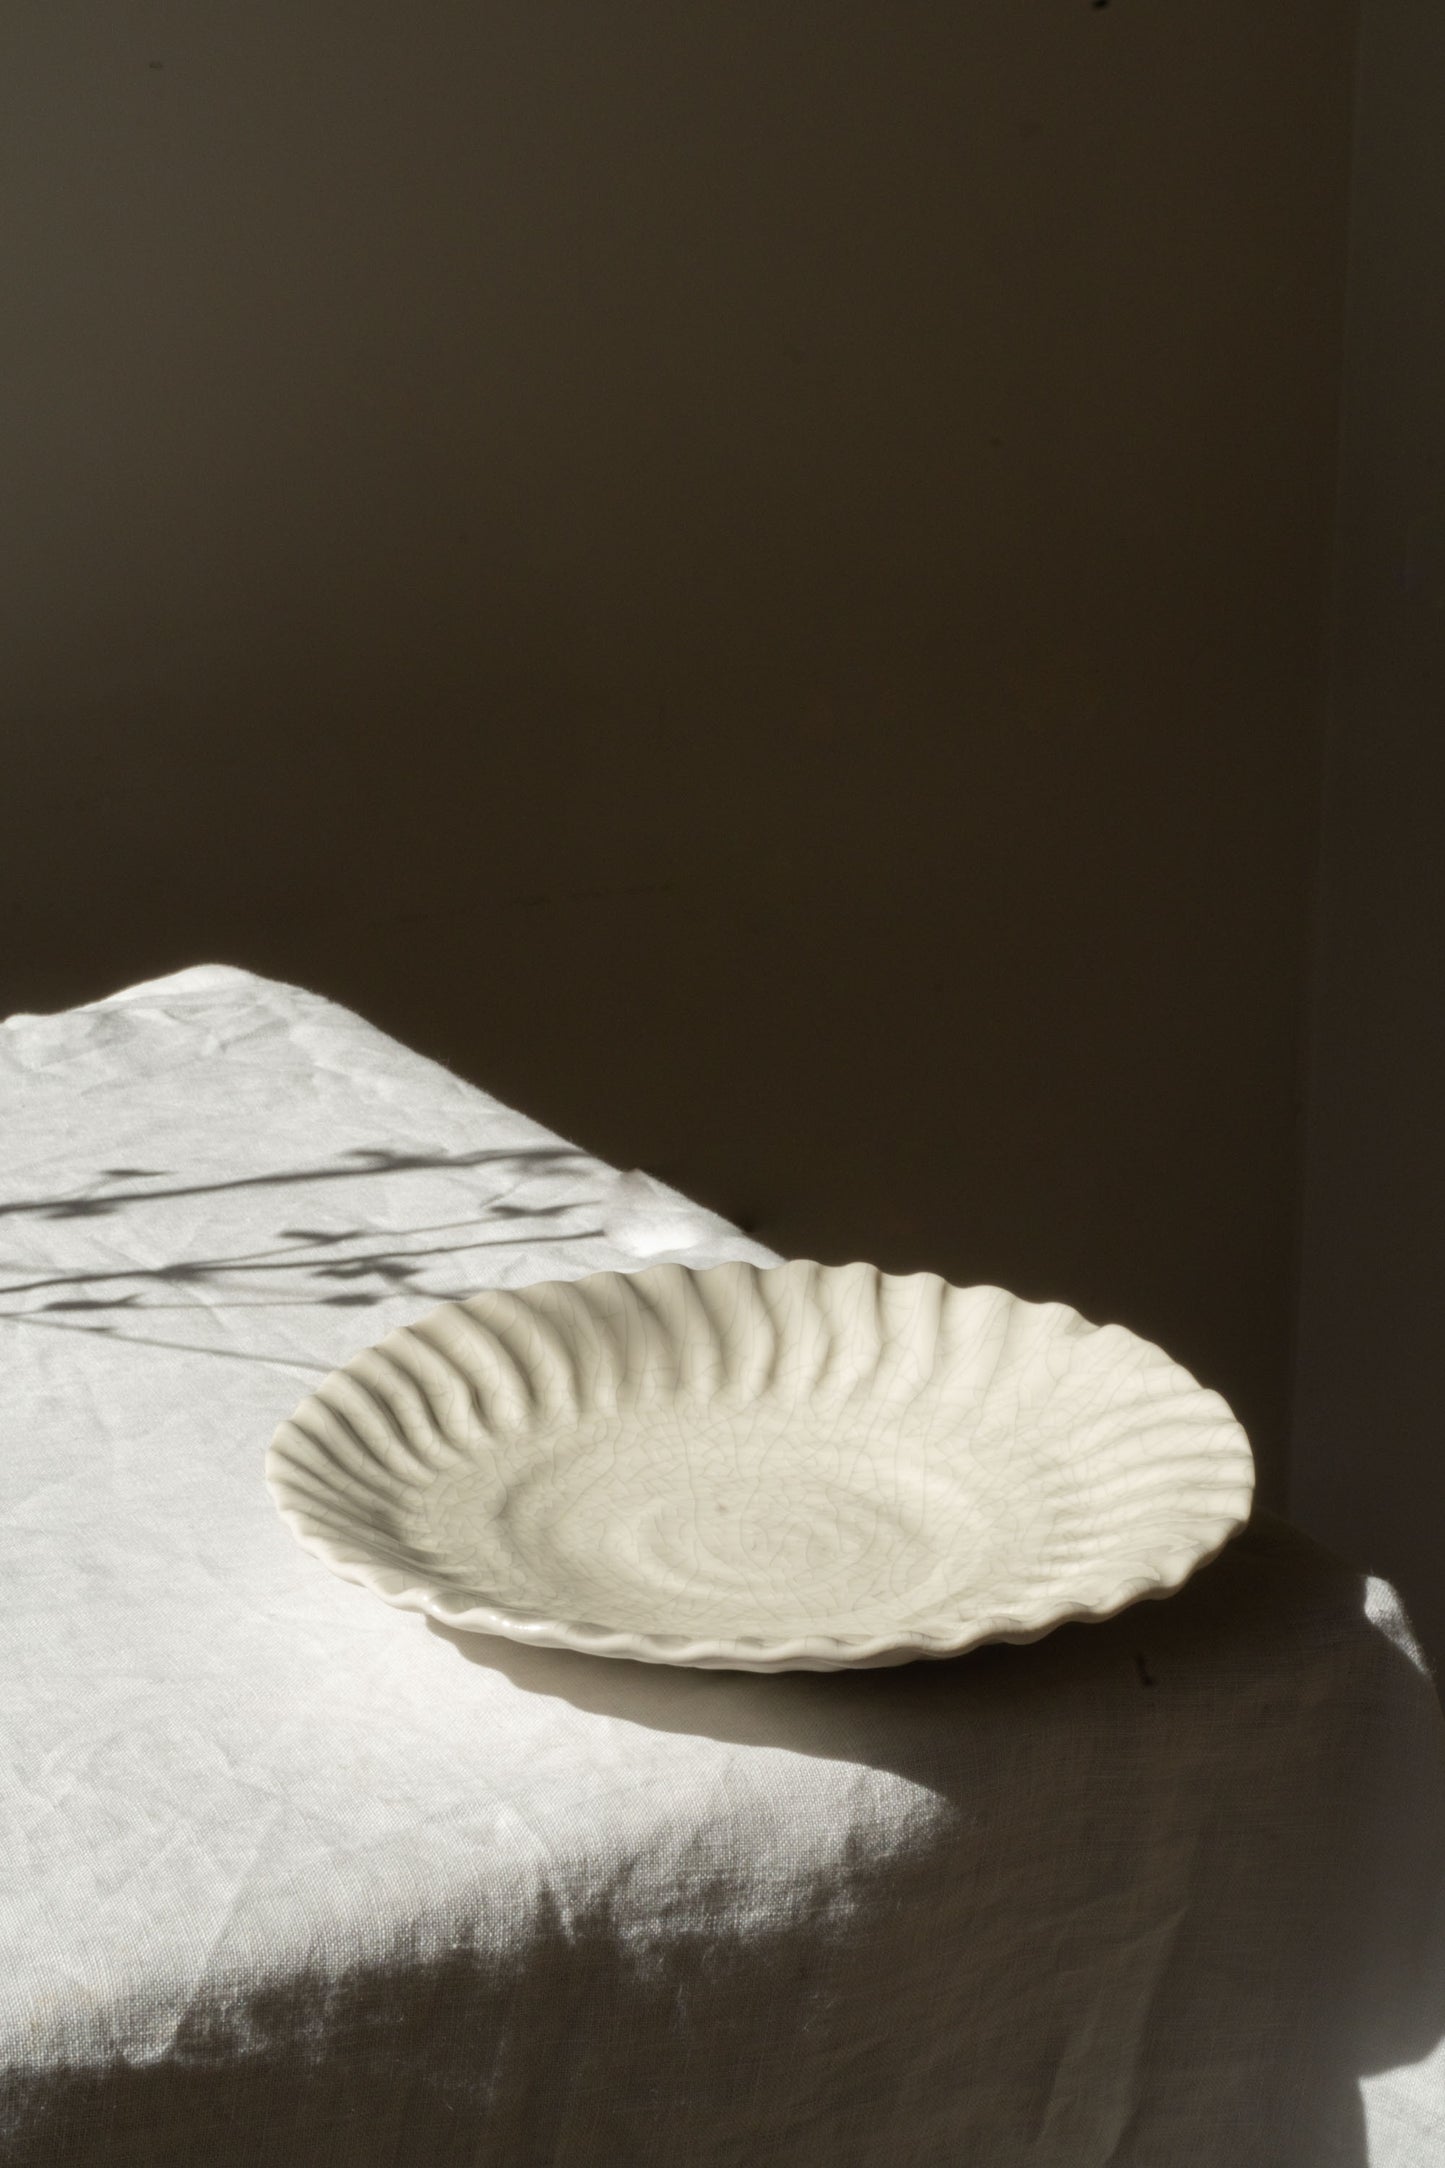 Dashi Plate White Crackled Glaze L by Jars Ceramistes.